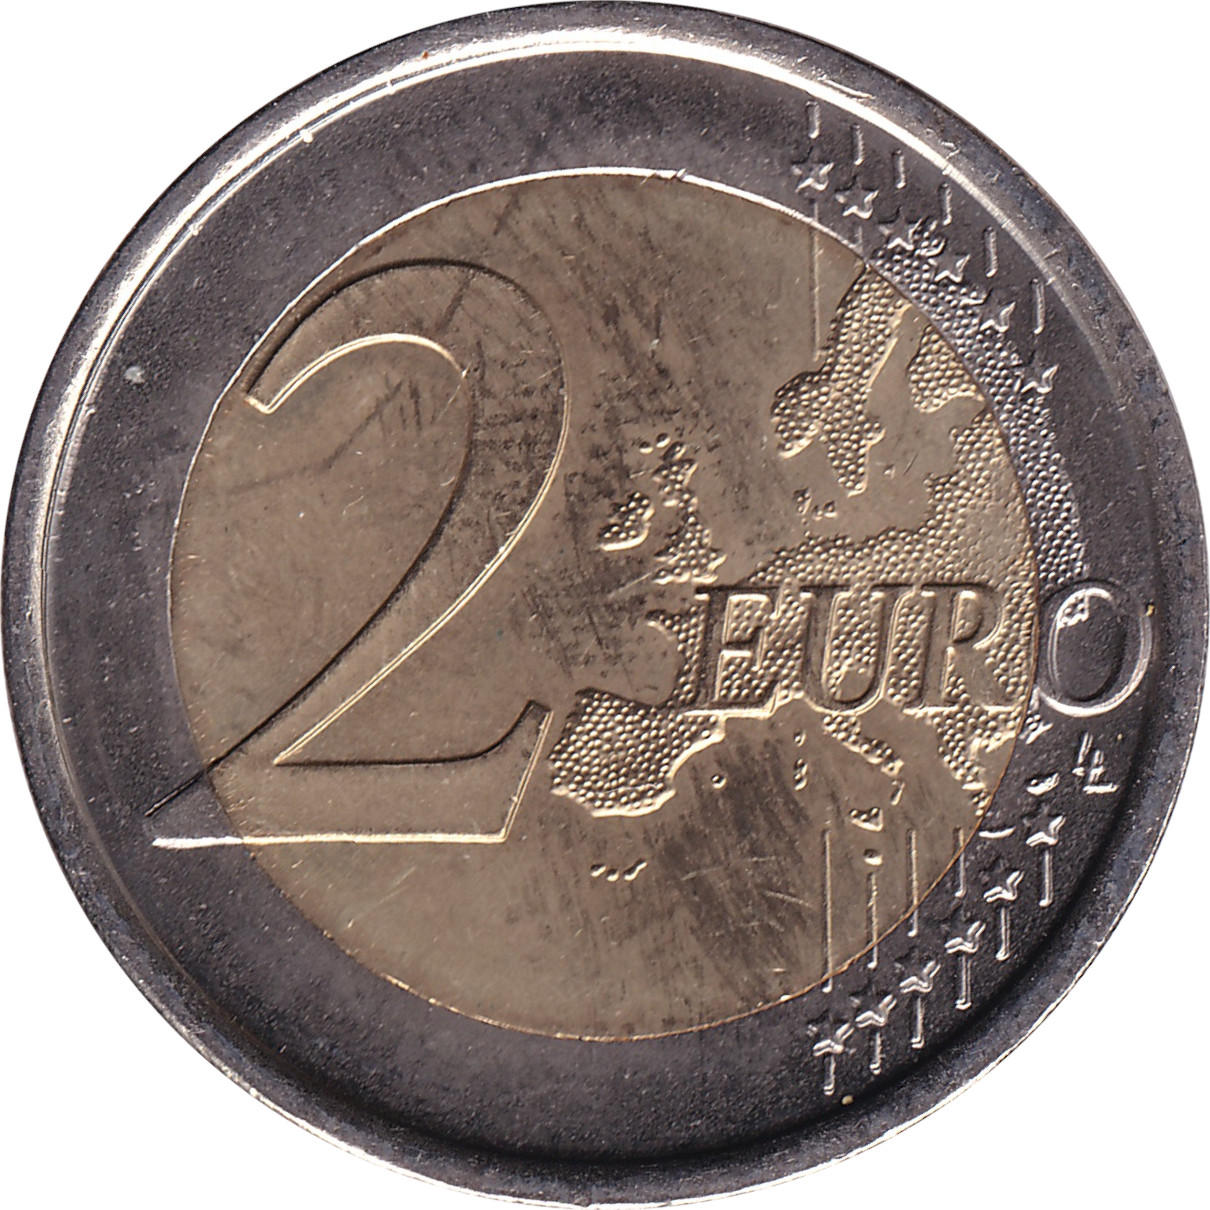 2 euro - Mise en circulation de l'Euro - Espagne